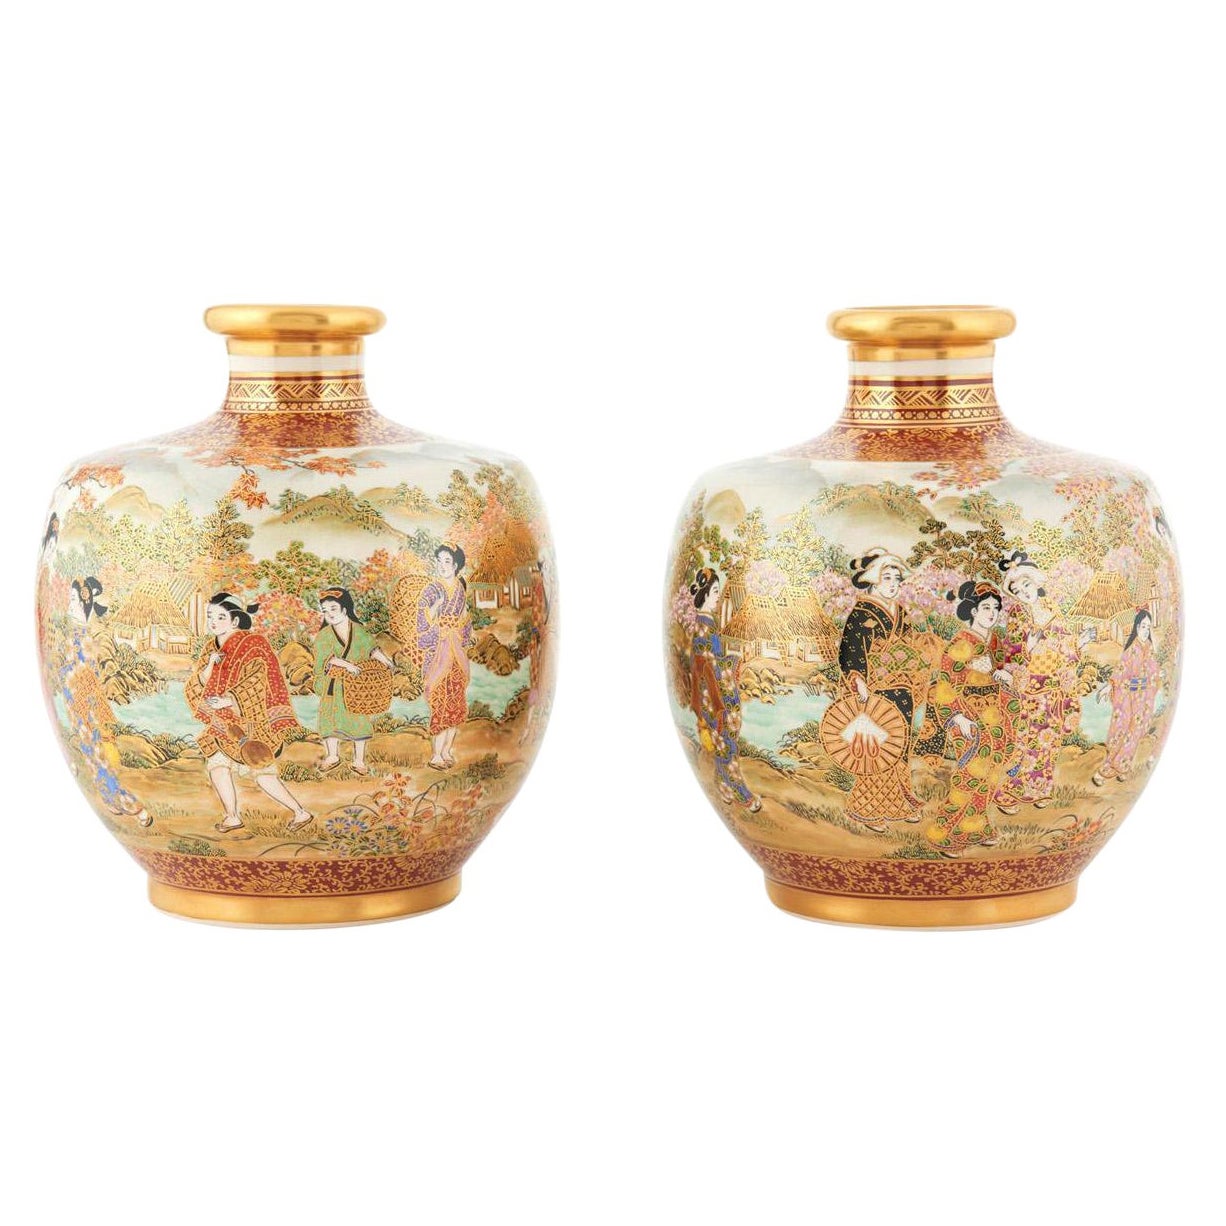 Pair of Fine Japanese Satsuma Vases, Ogawa Yozan Studio, First Half 20th Century For Sale